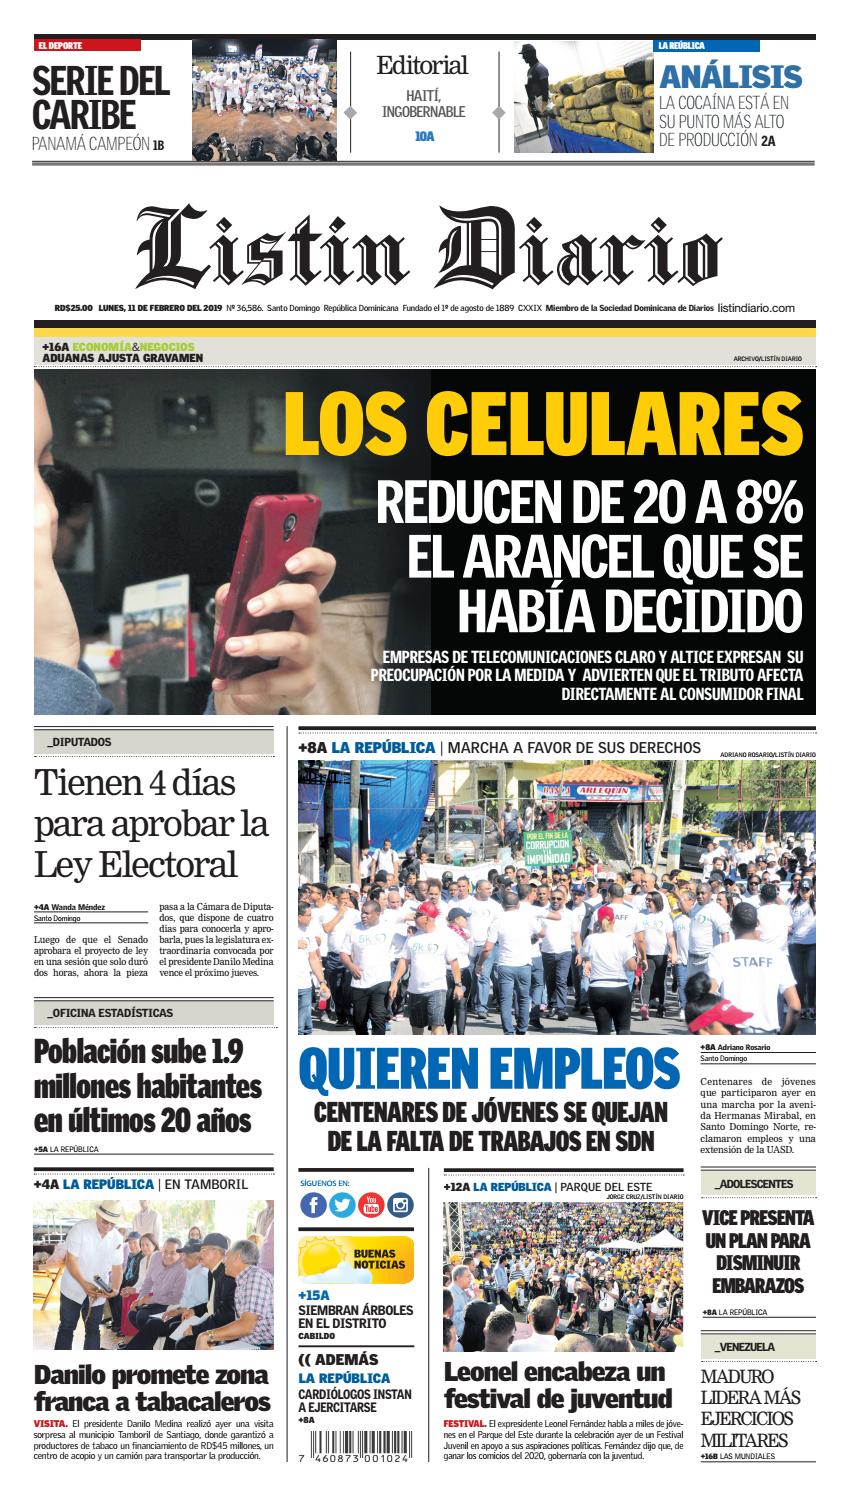 Portada Periódico Listín Diario, Lunes 11 de Febrero 2019